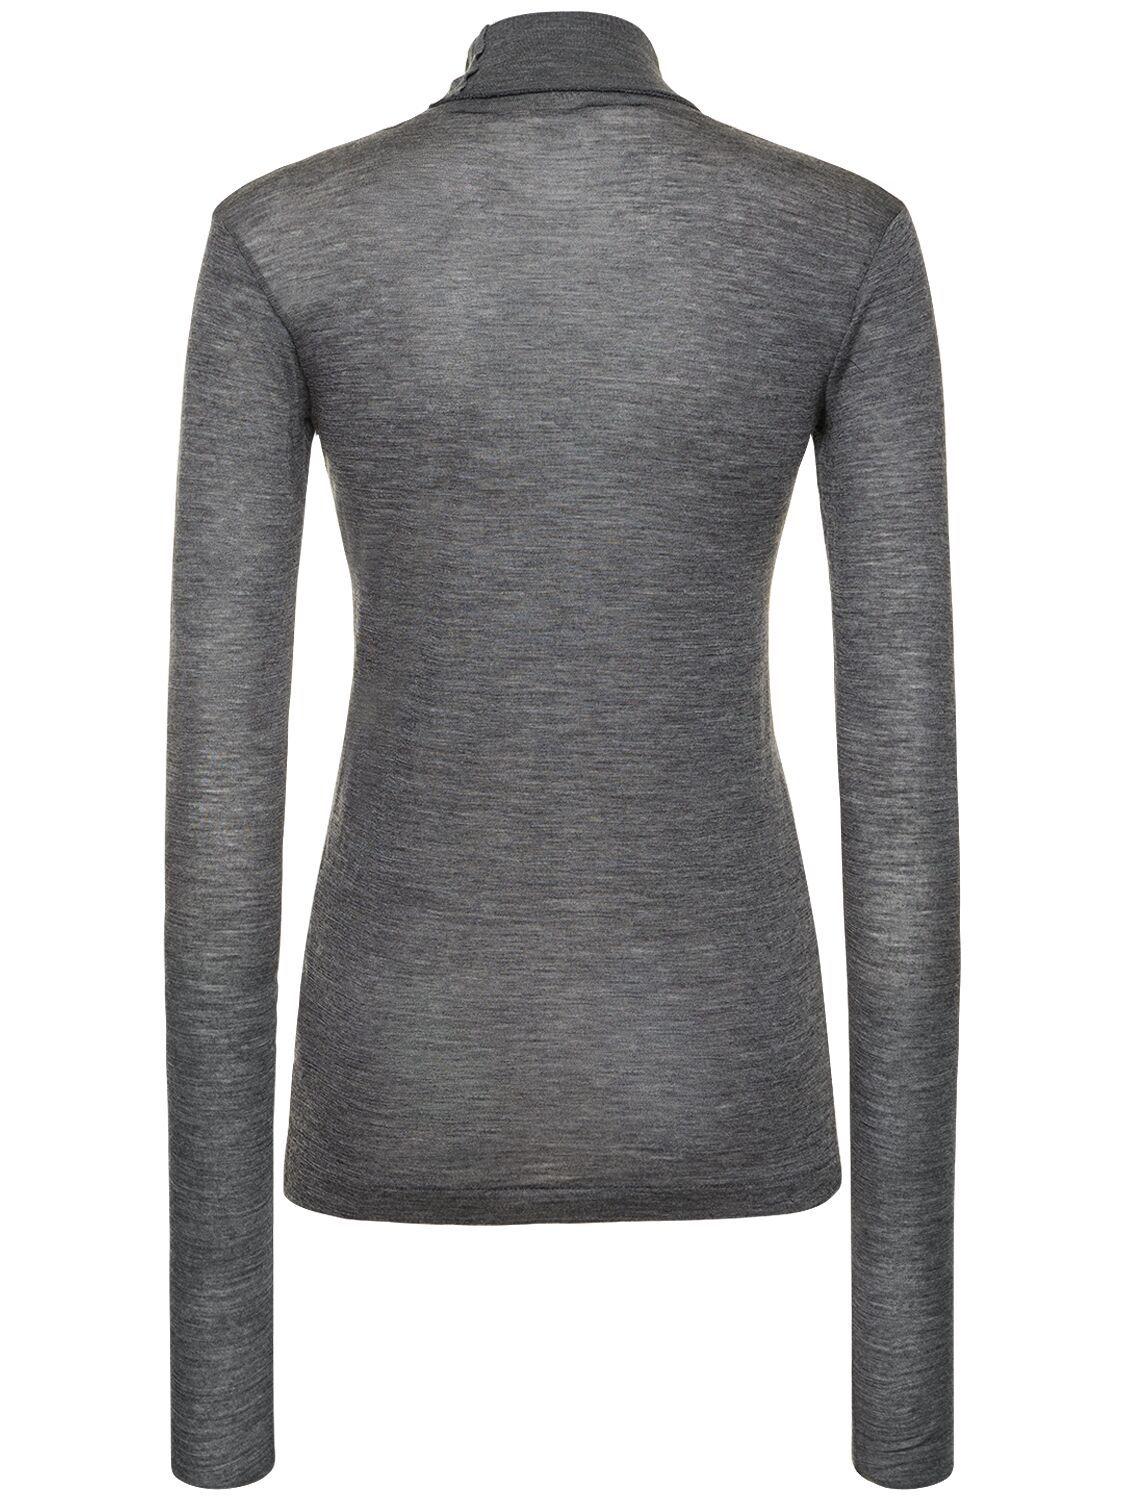 AURALEE Super Soft Sheer Wool Jersey Top in Gray | Lyst